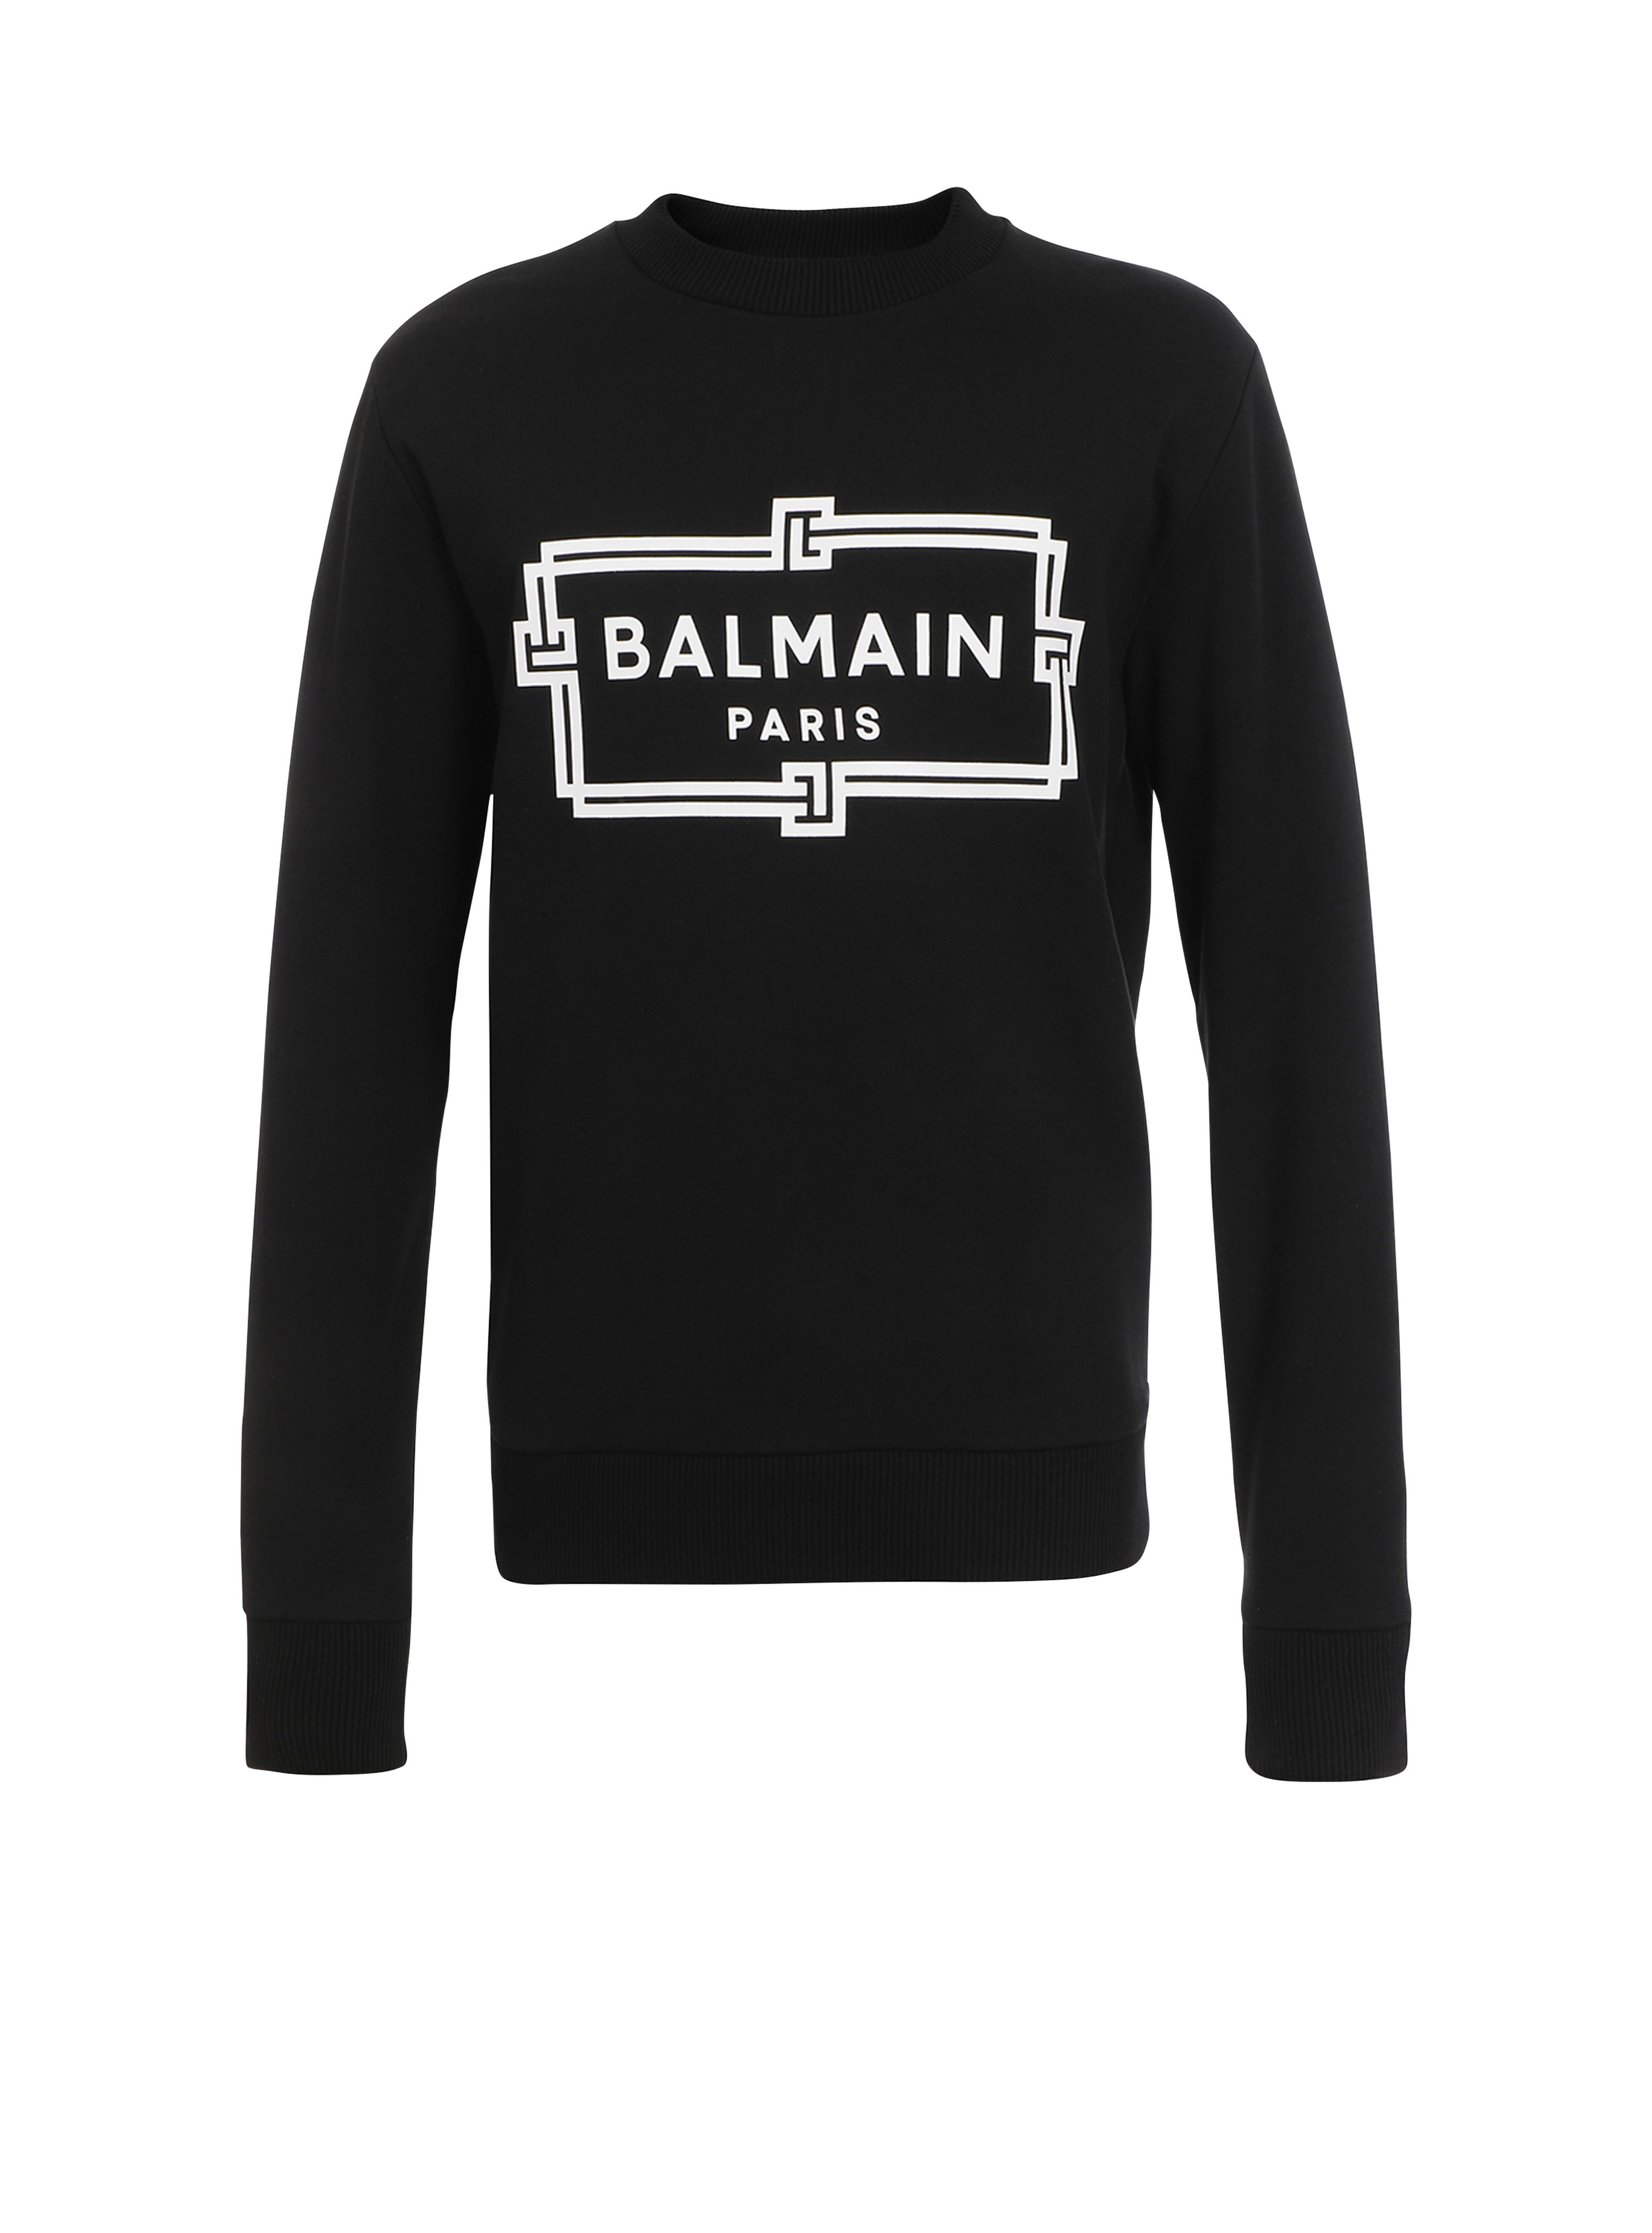 Cotton sweatshirt with flocked Balmain logo, black